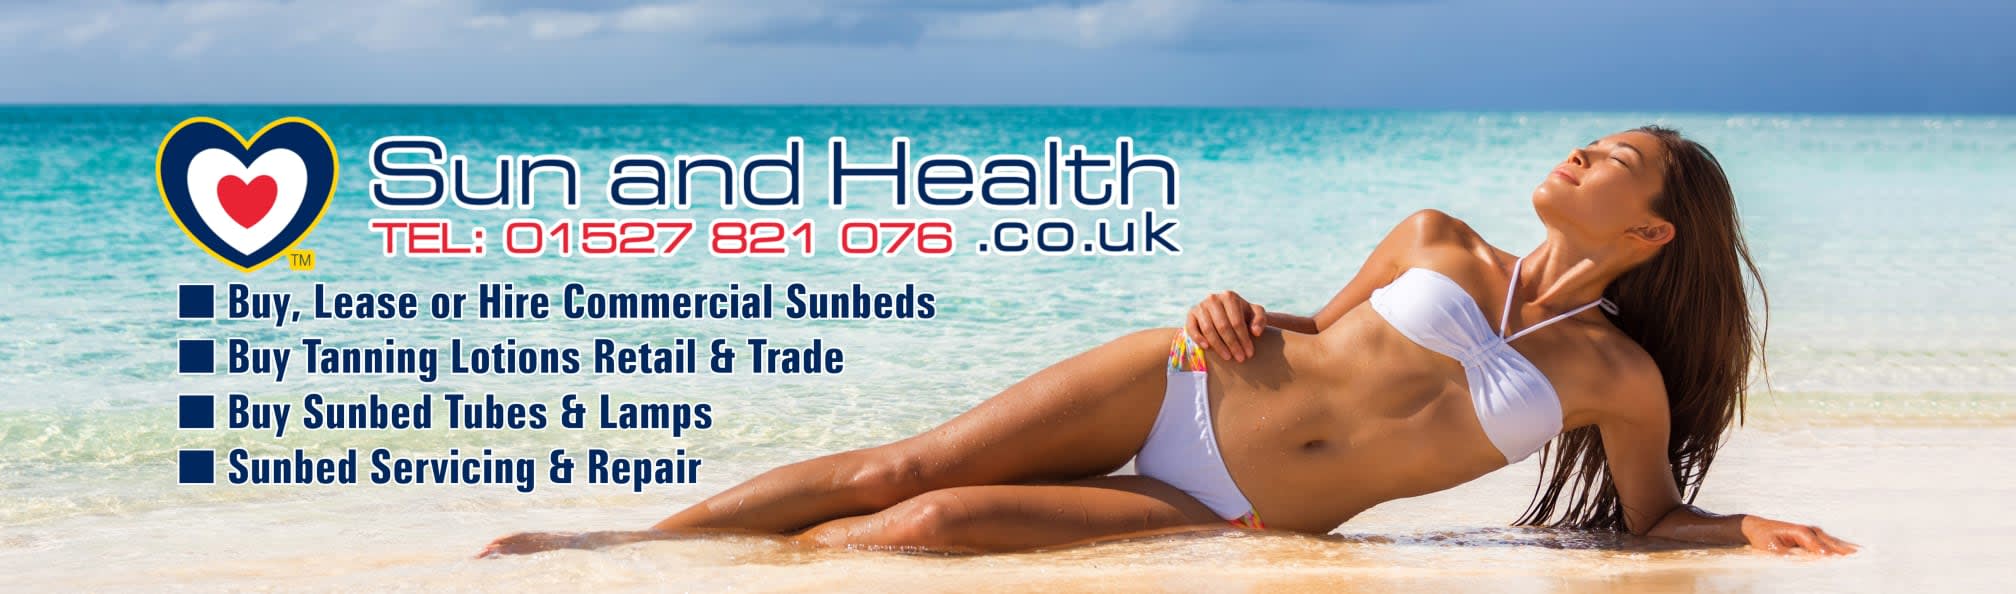 Images Sun and Health International Ltd